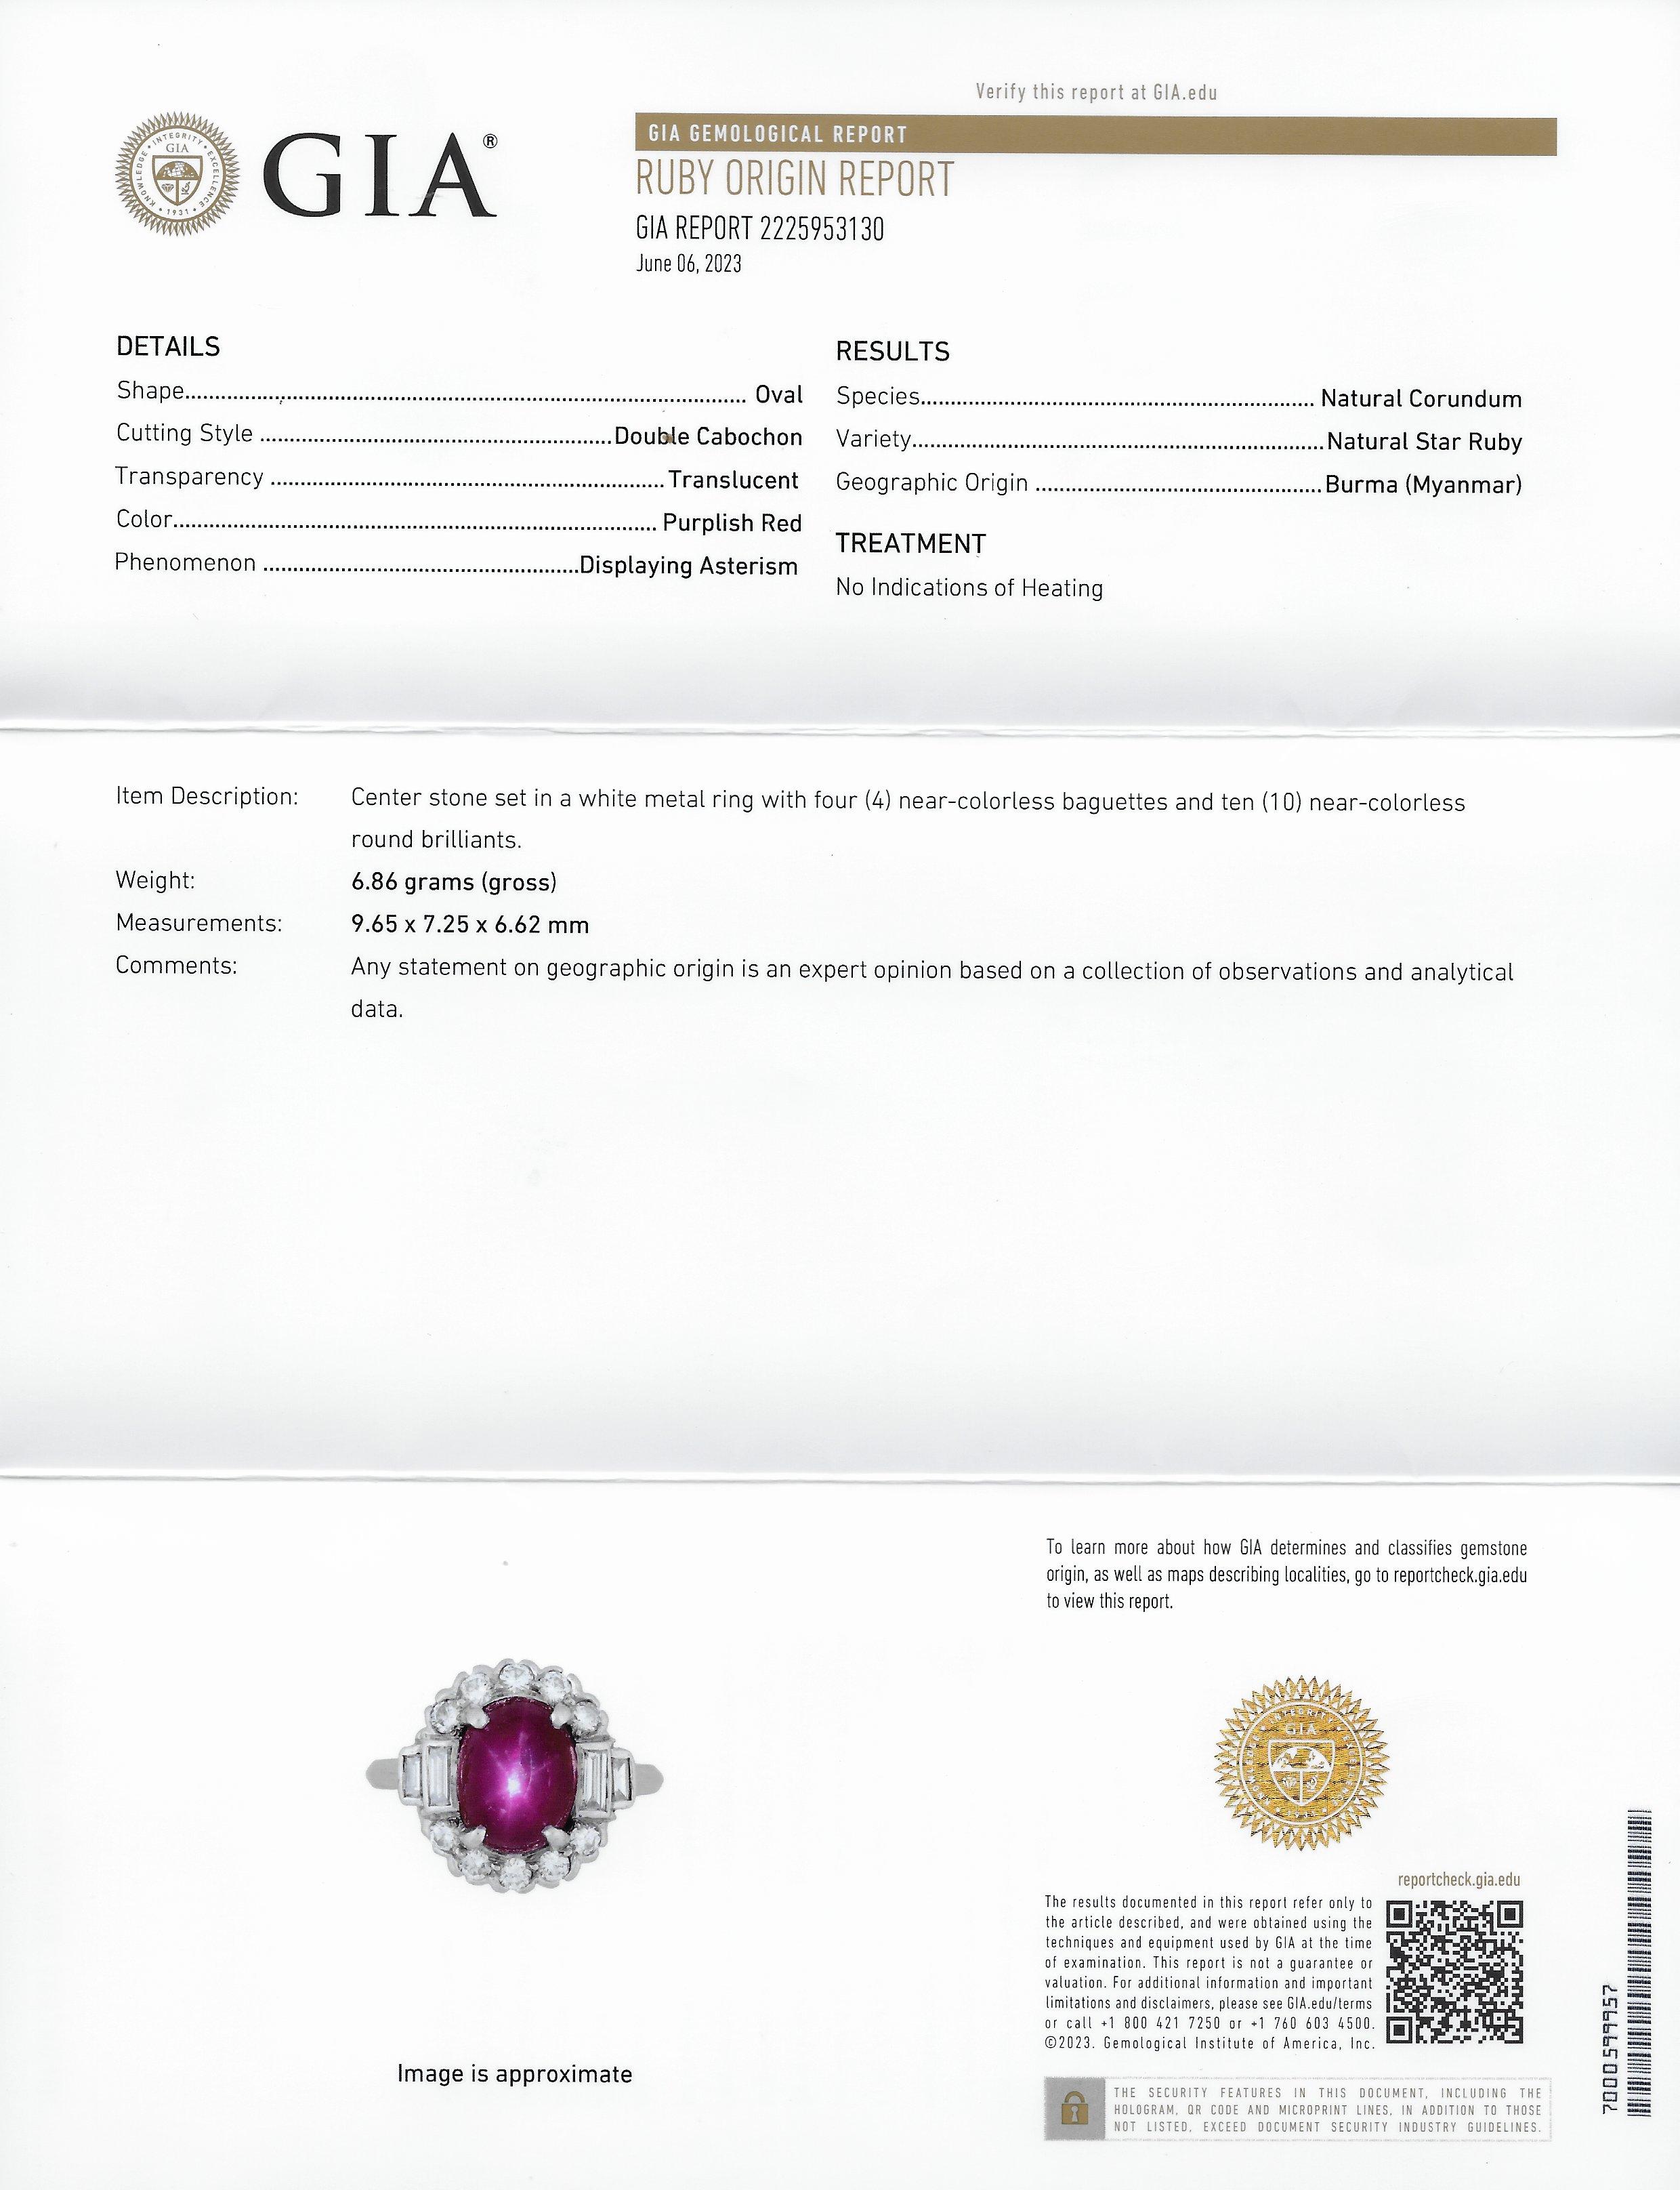 Felger Inc. Mid-Century 5.65 CTW No Heat Bruma Star Ruby Diamond Ring GIA 10